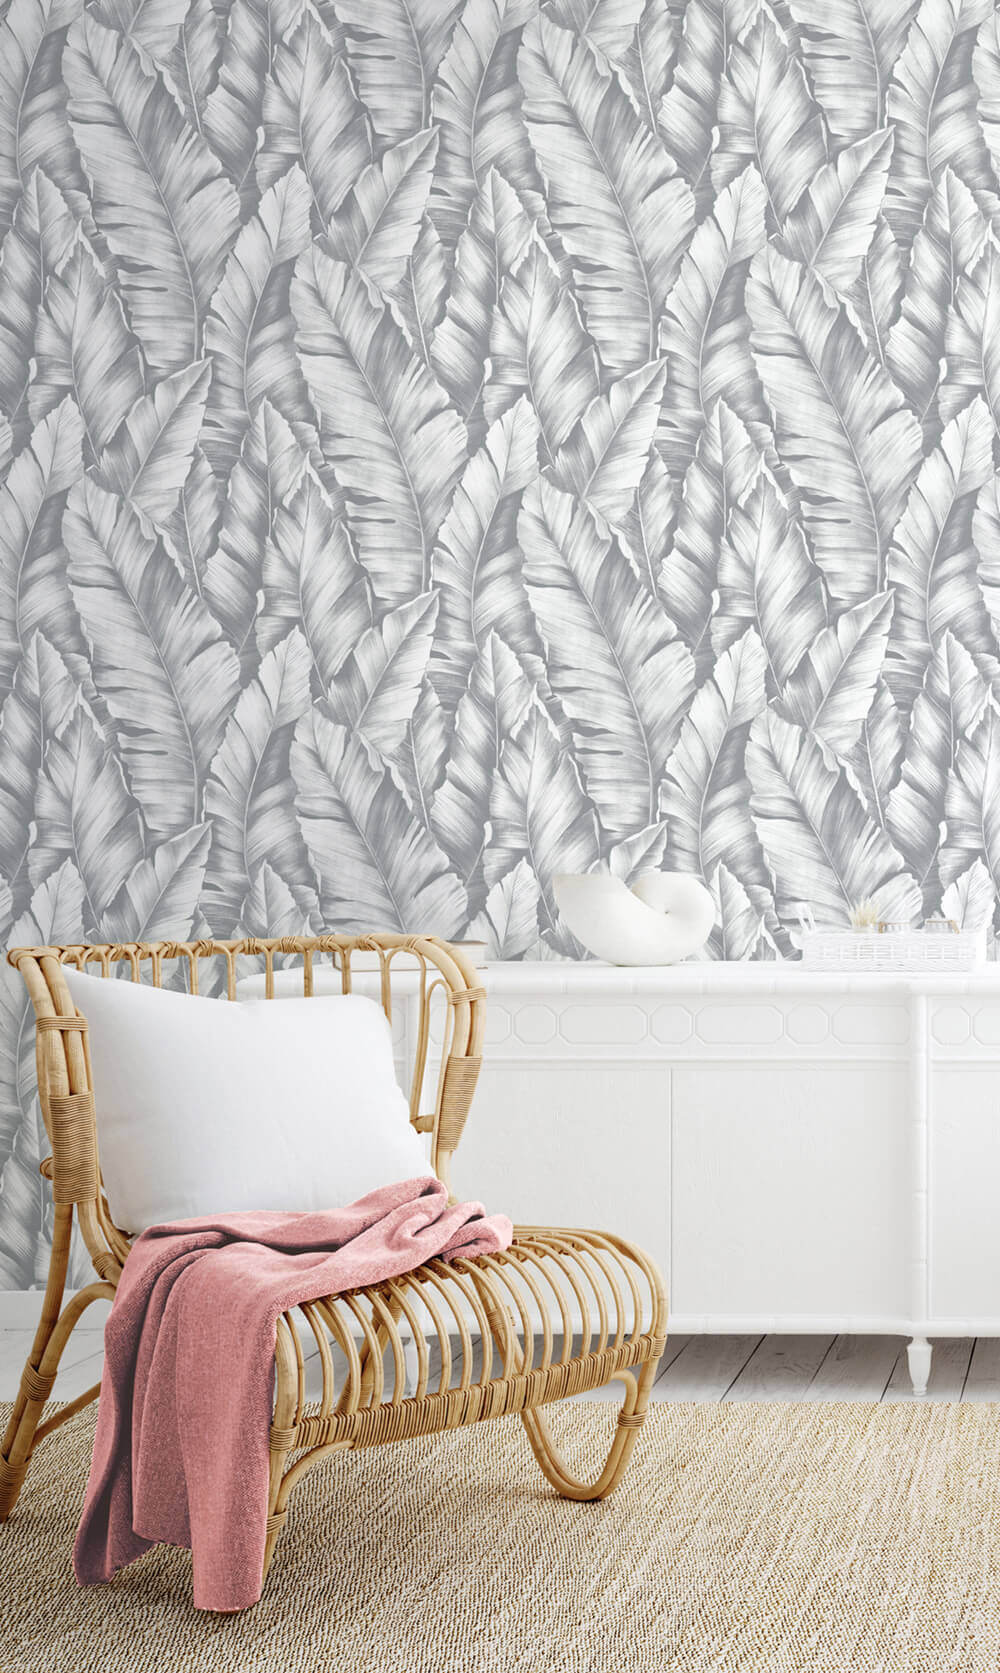 NextWall Baha Banana Leaves Peel & Stick Wallpaper - Gray